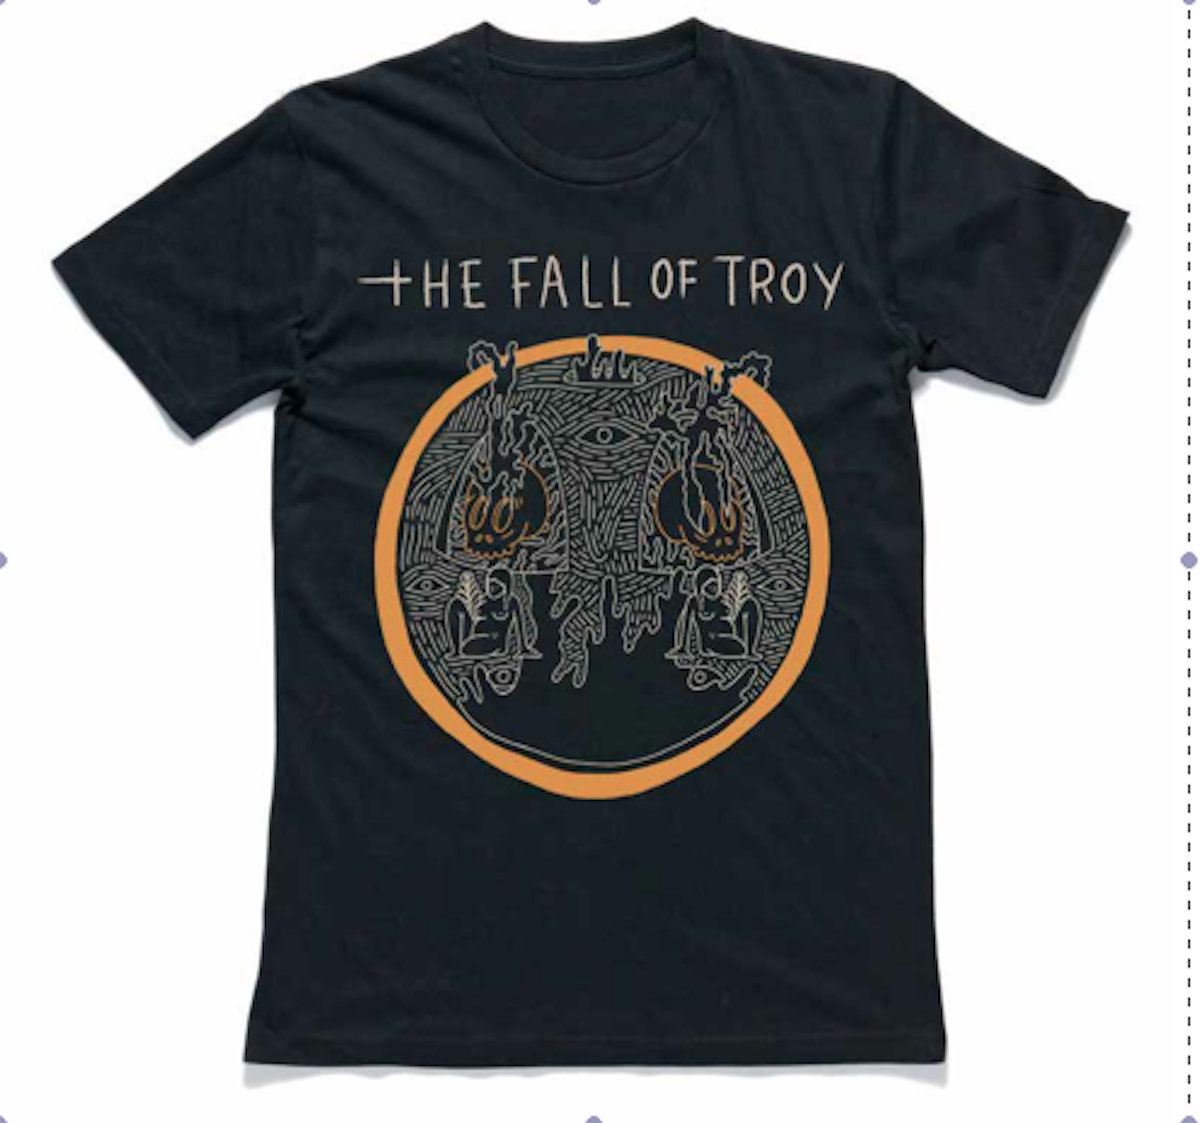 The Fall of Troy Australian tour t-shirt + CD | Bird's Robe Records